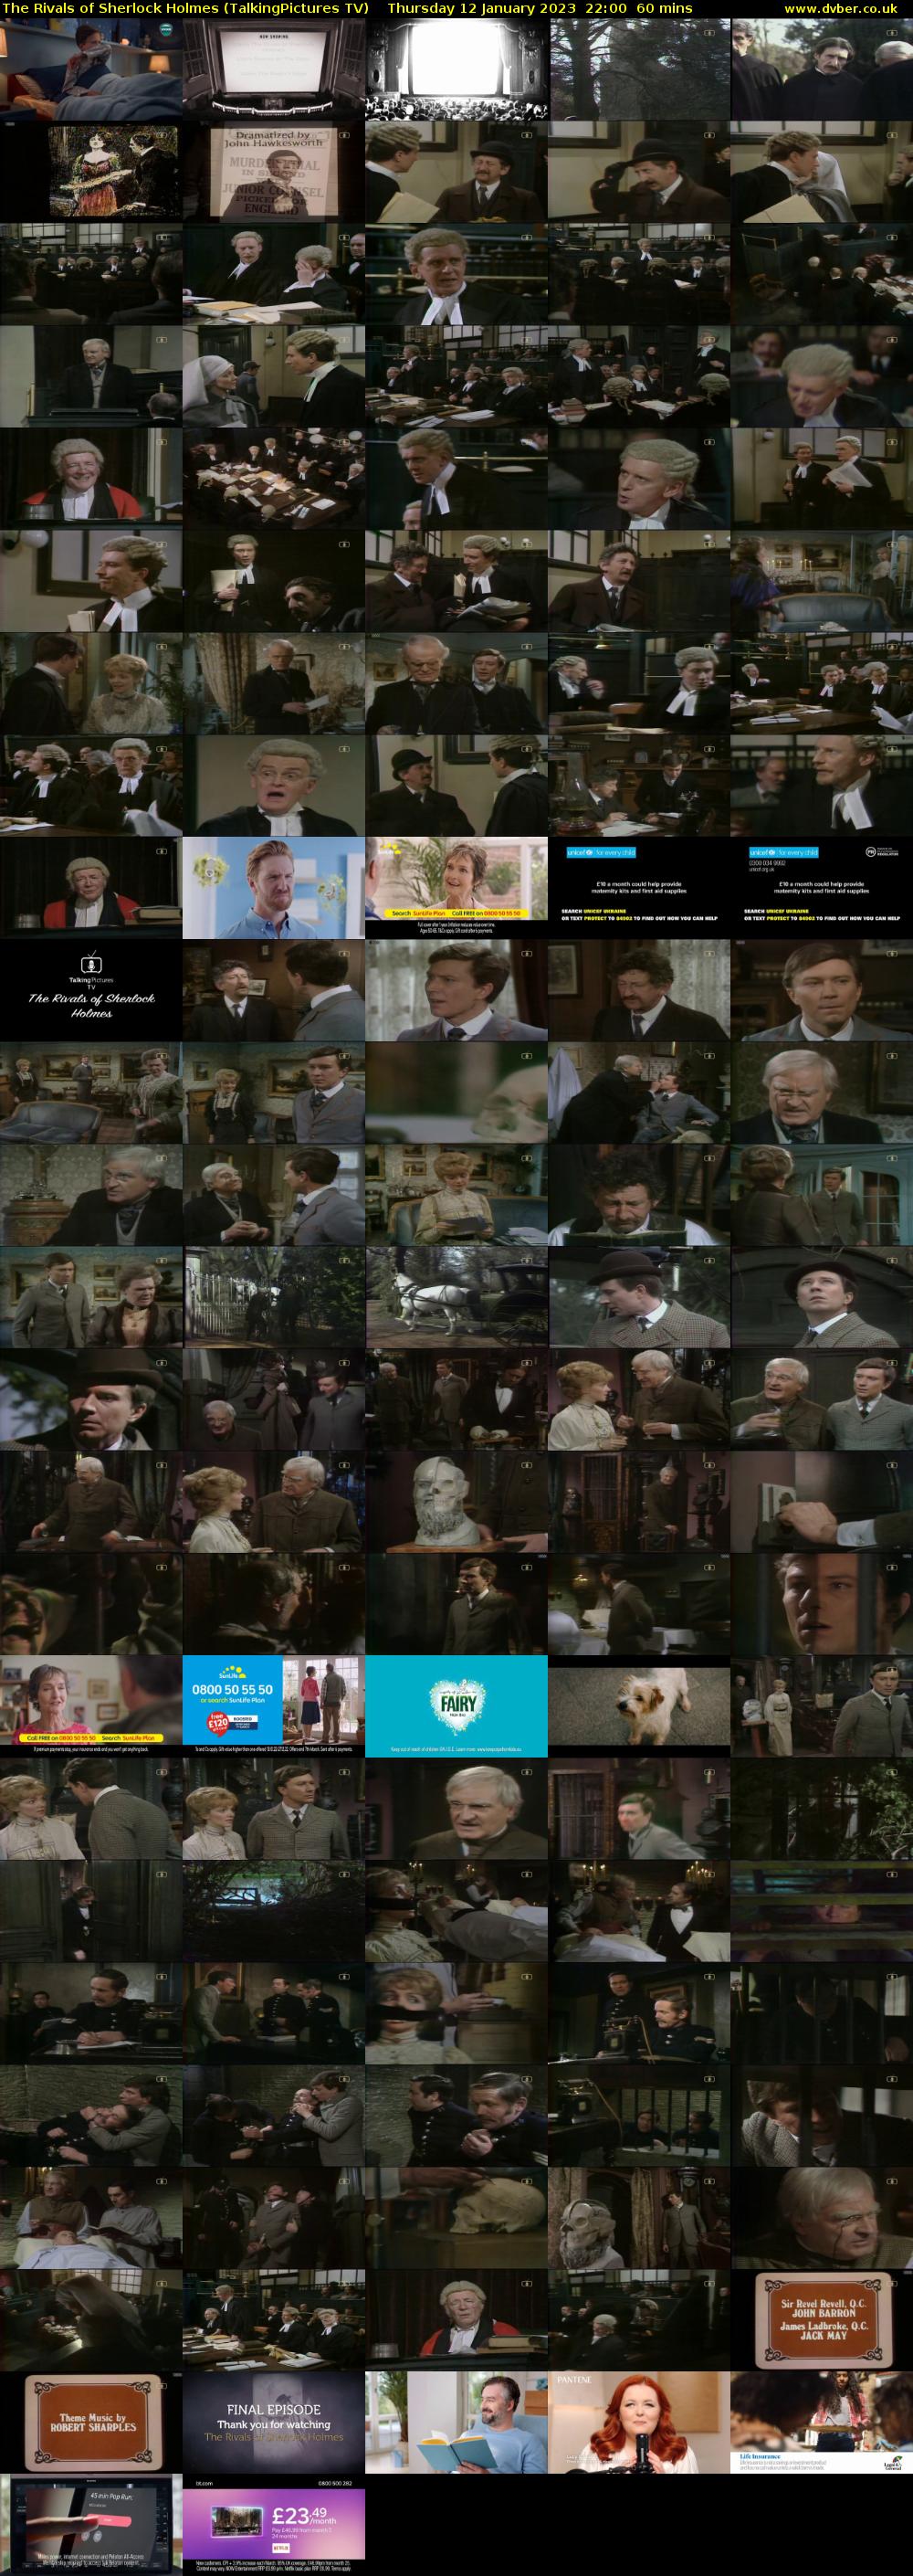 The Rivals of Sherlock Holmes (TalkingPictures TV) Thursday 12 January 2023 22:00 - 23:00